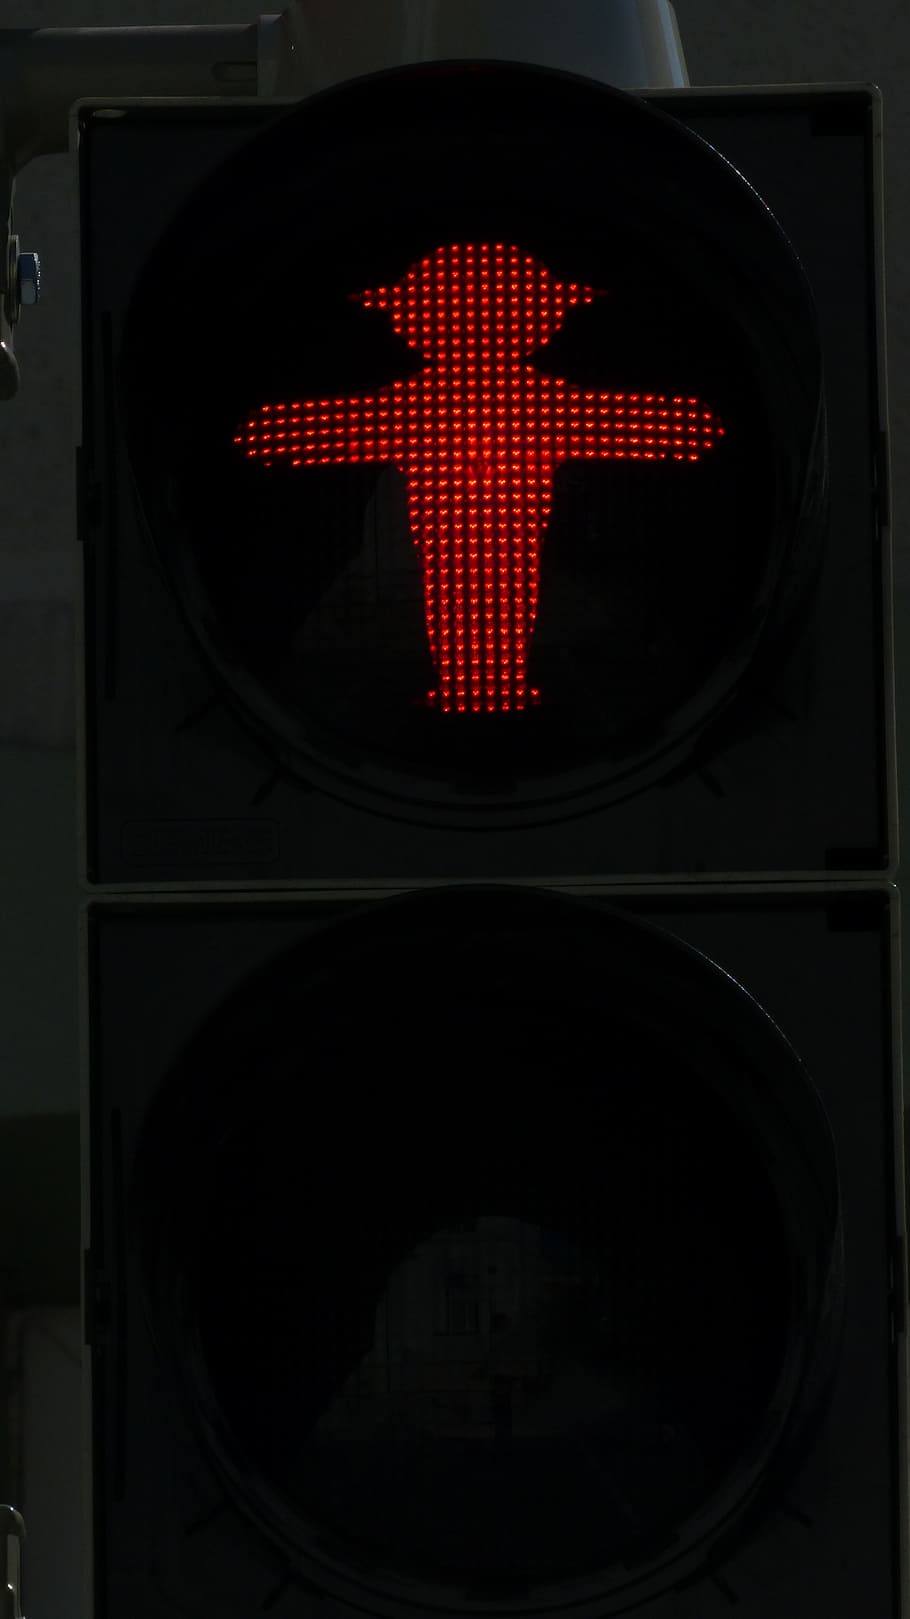 lampu lalu lintas, jembatan, manusia hijau kecil, sinyal lalu lintas, merah, laki-laki, sinyal lampu, laki-laki roda gigi, rambu jalan, jalan